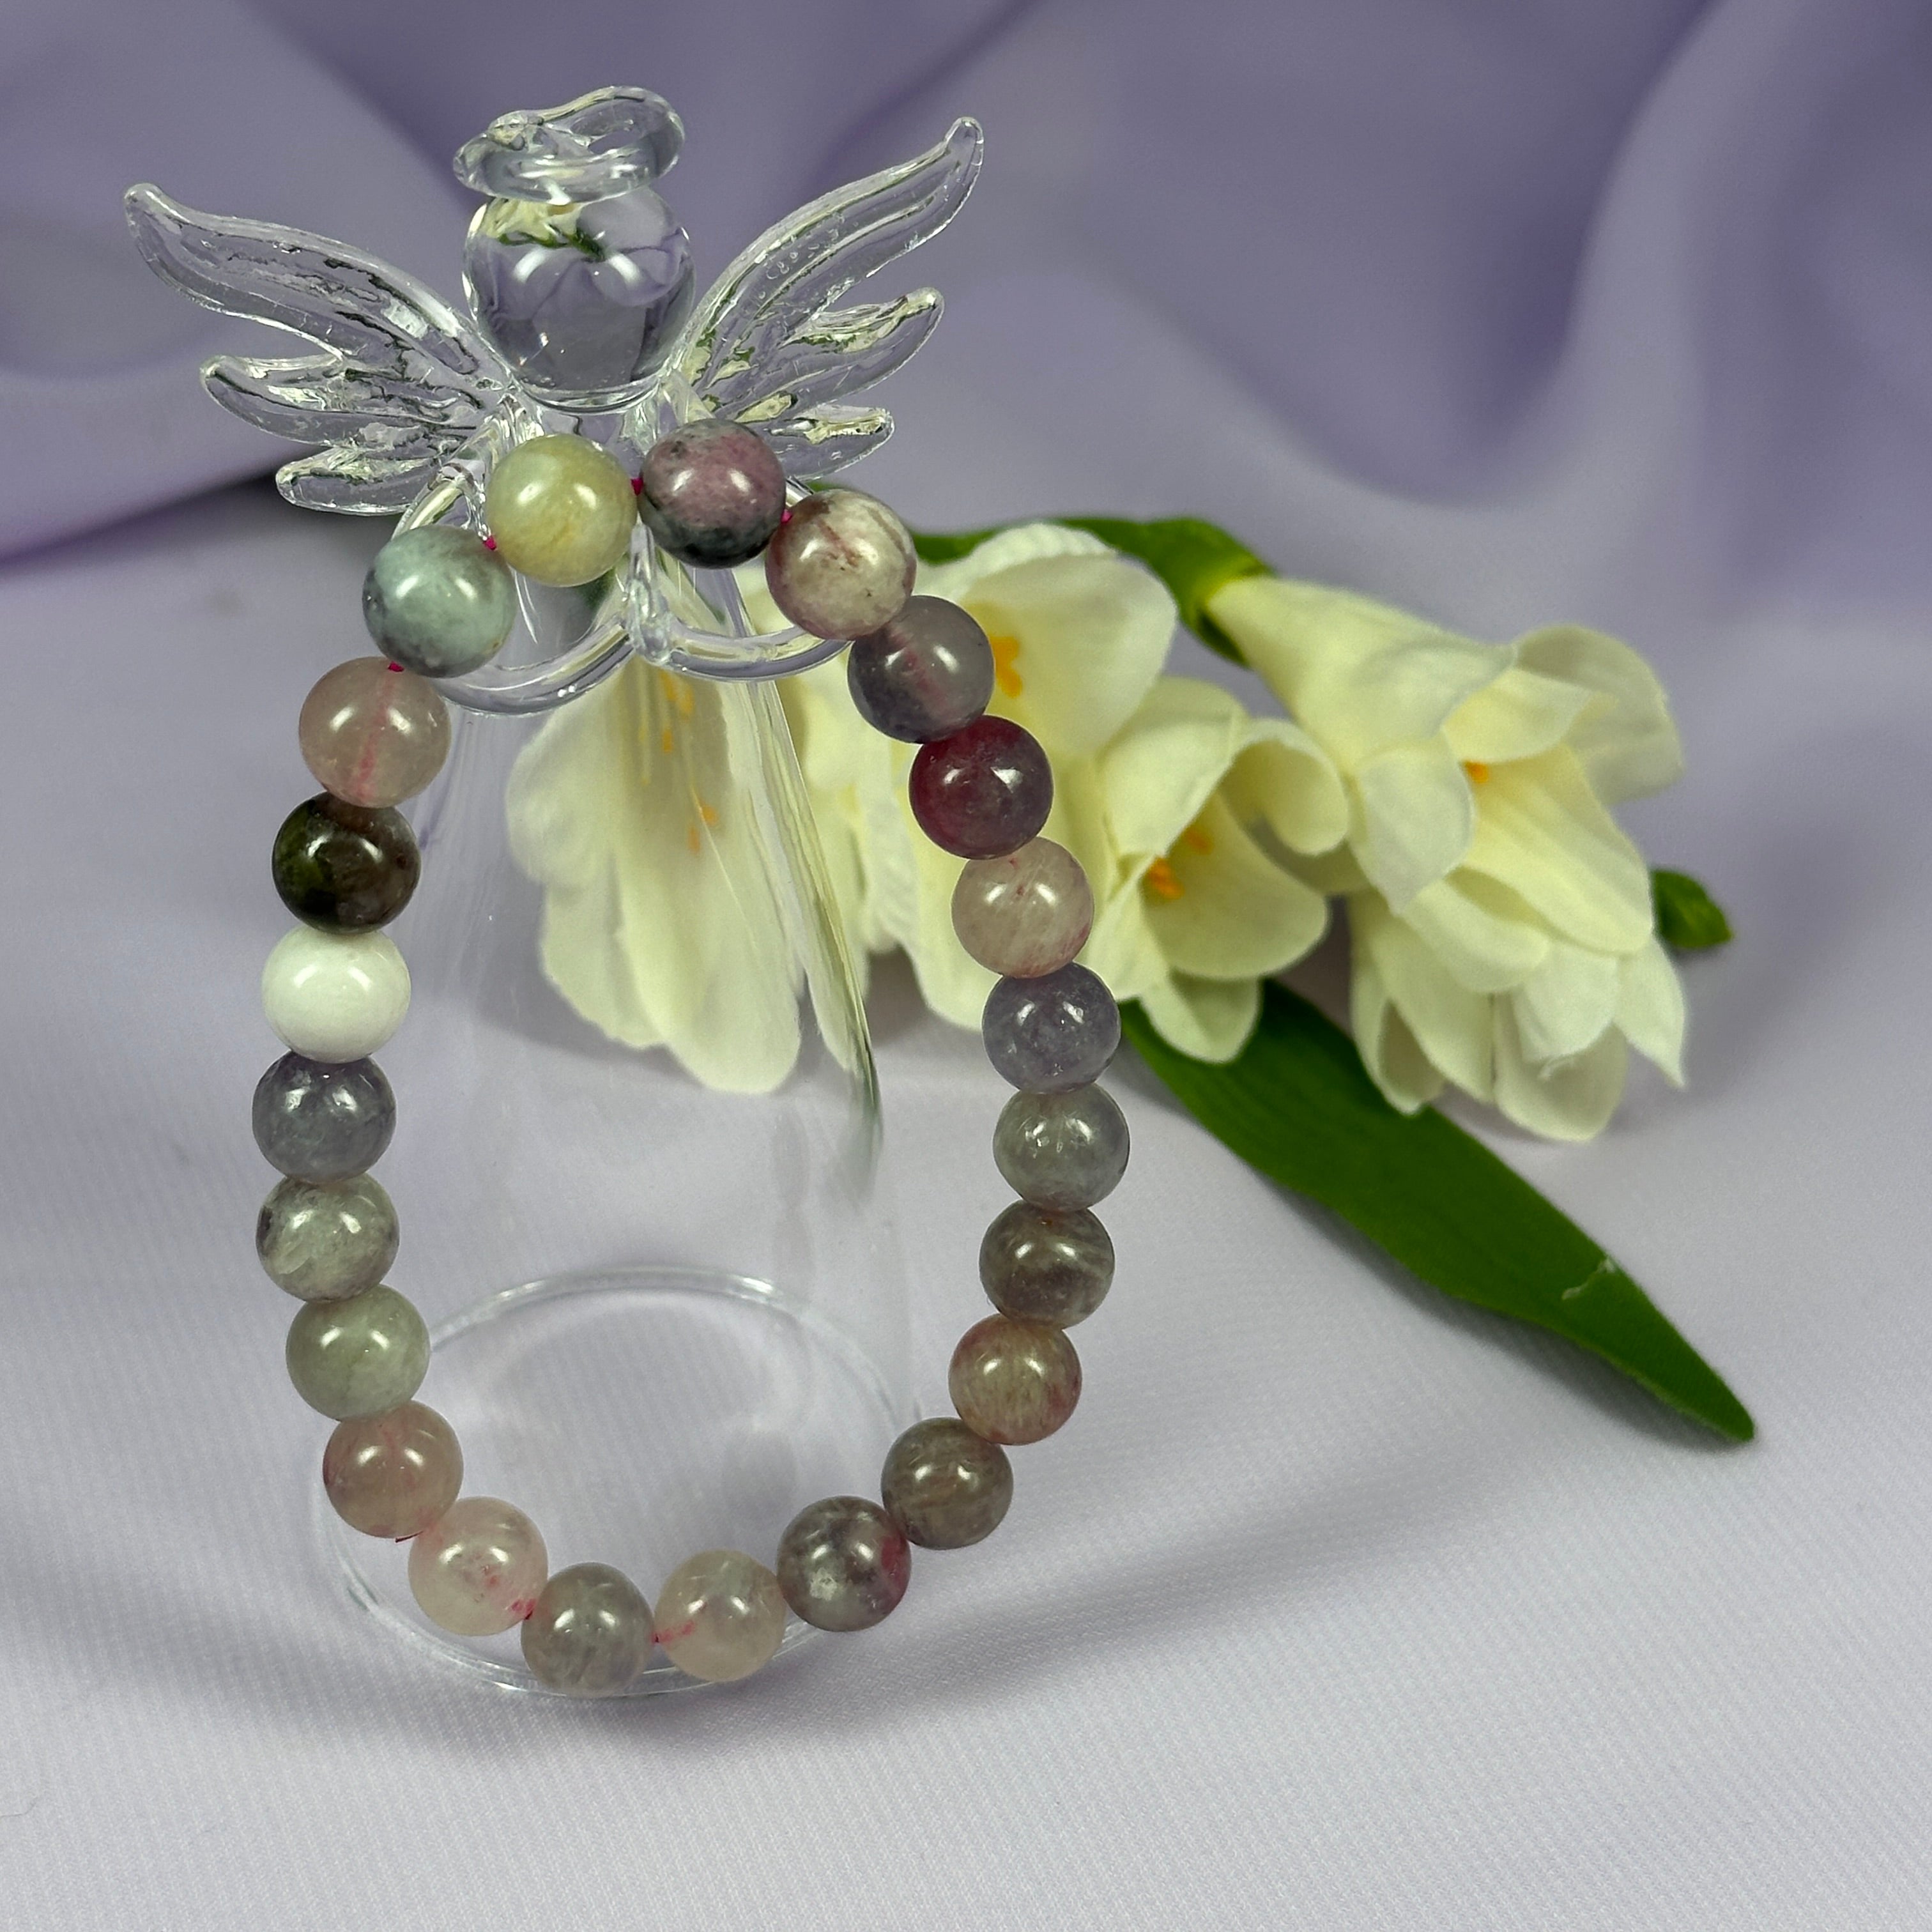 New!! Unicorn Stone bead bracelet 19.8g SN54769